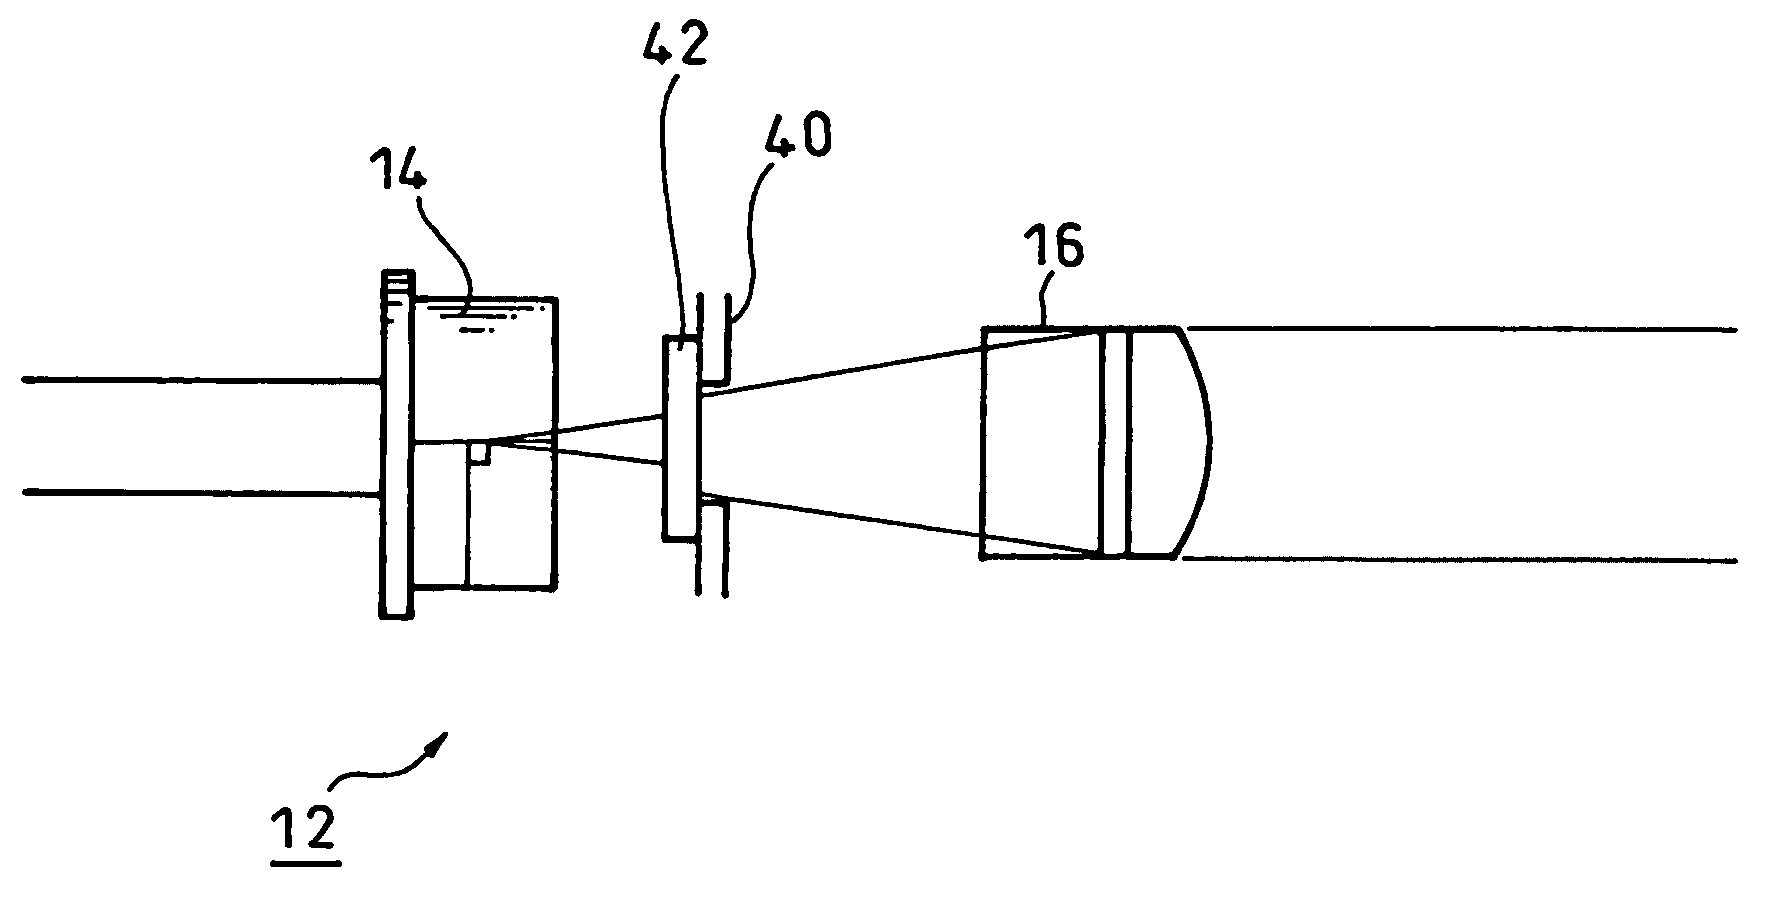 Optical encoder and collimator lens